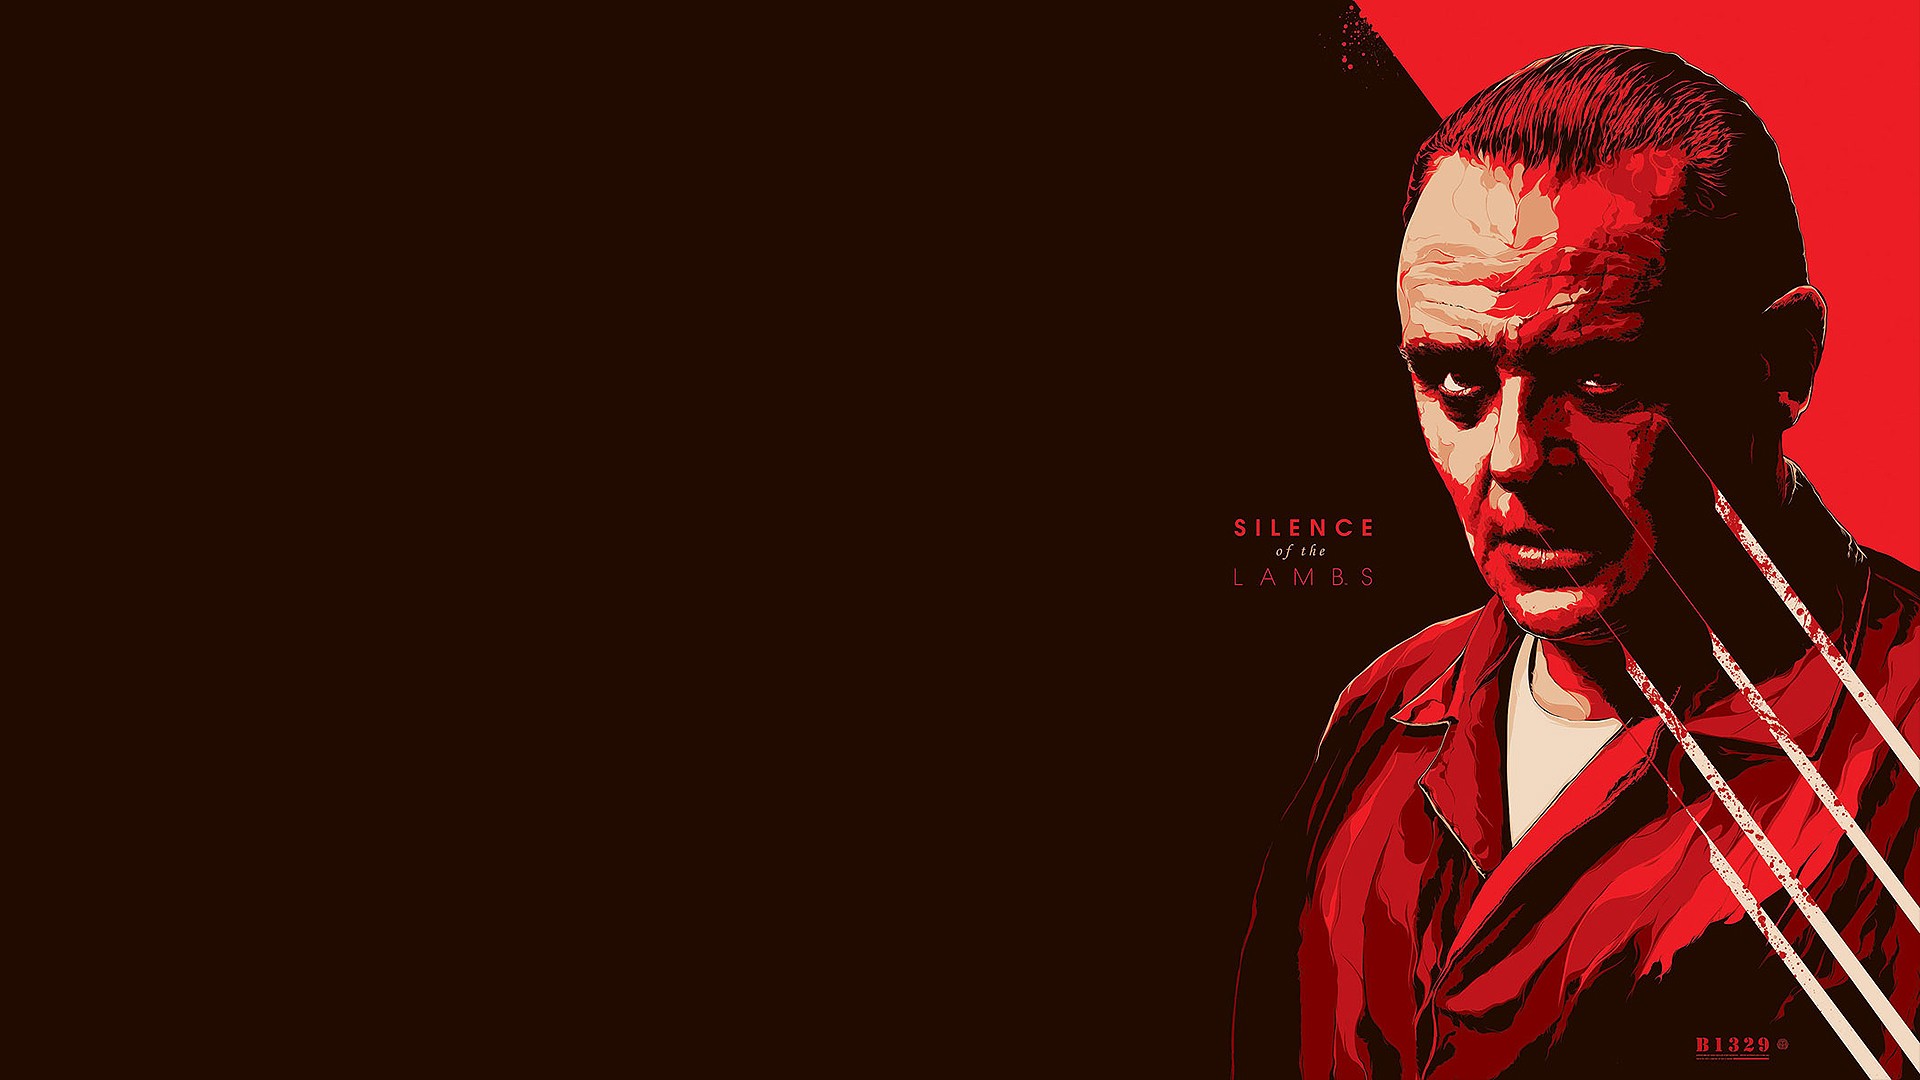 Hannibal Lecter Silence Of The Lambs 1080p Wallpaper